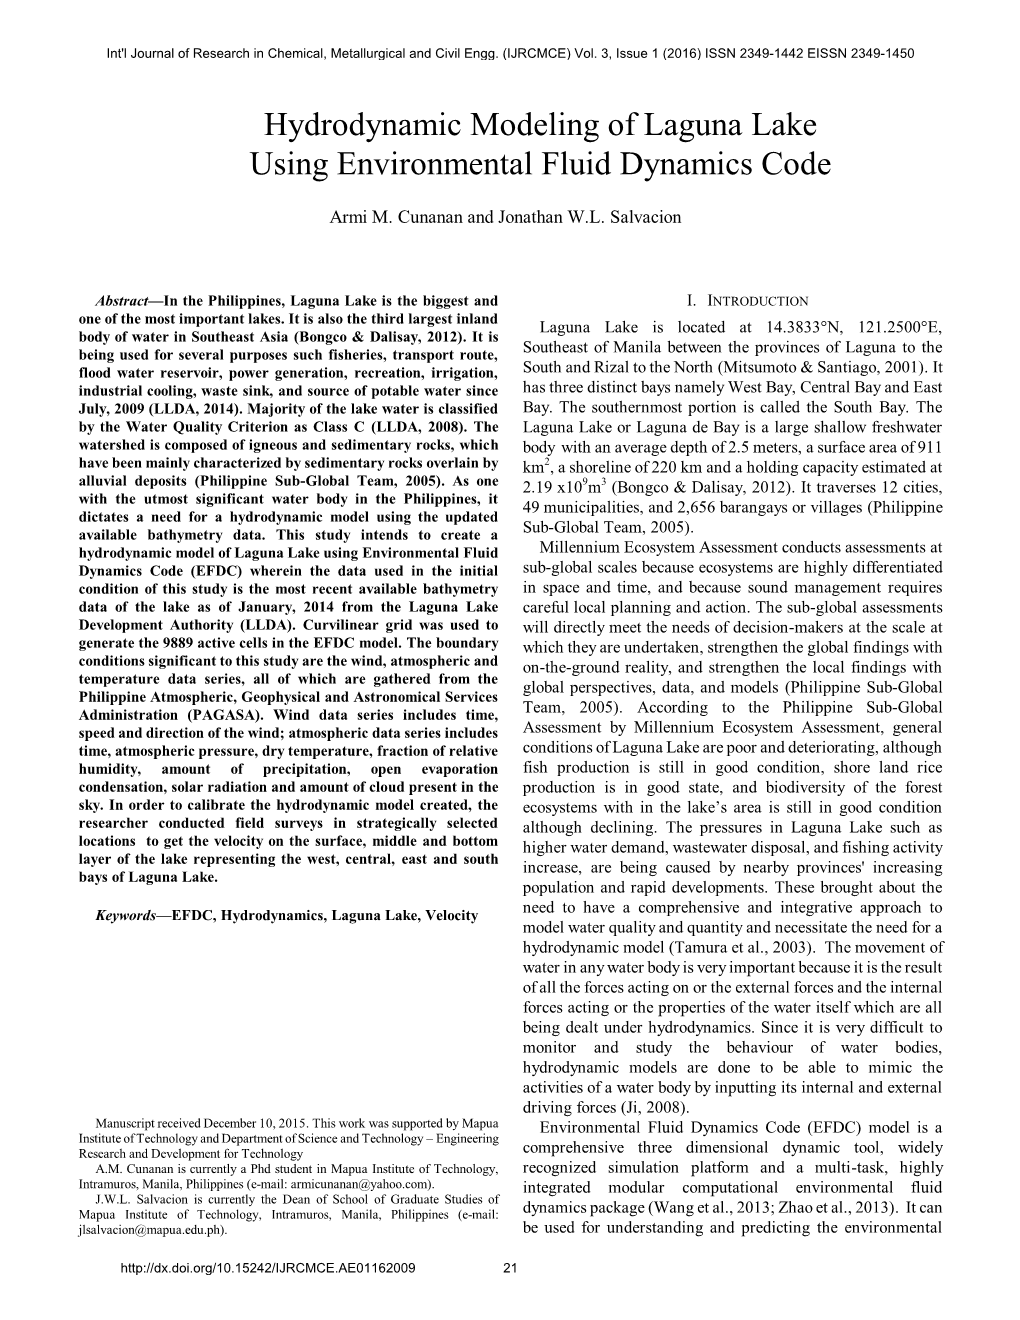 Hydrodynamic Modeling of Laguna Lake Using Environmental Fluid Dynamics Code